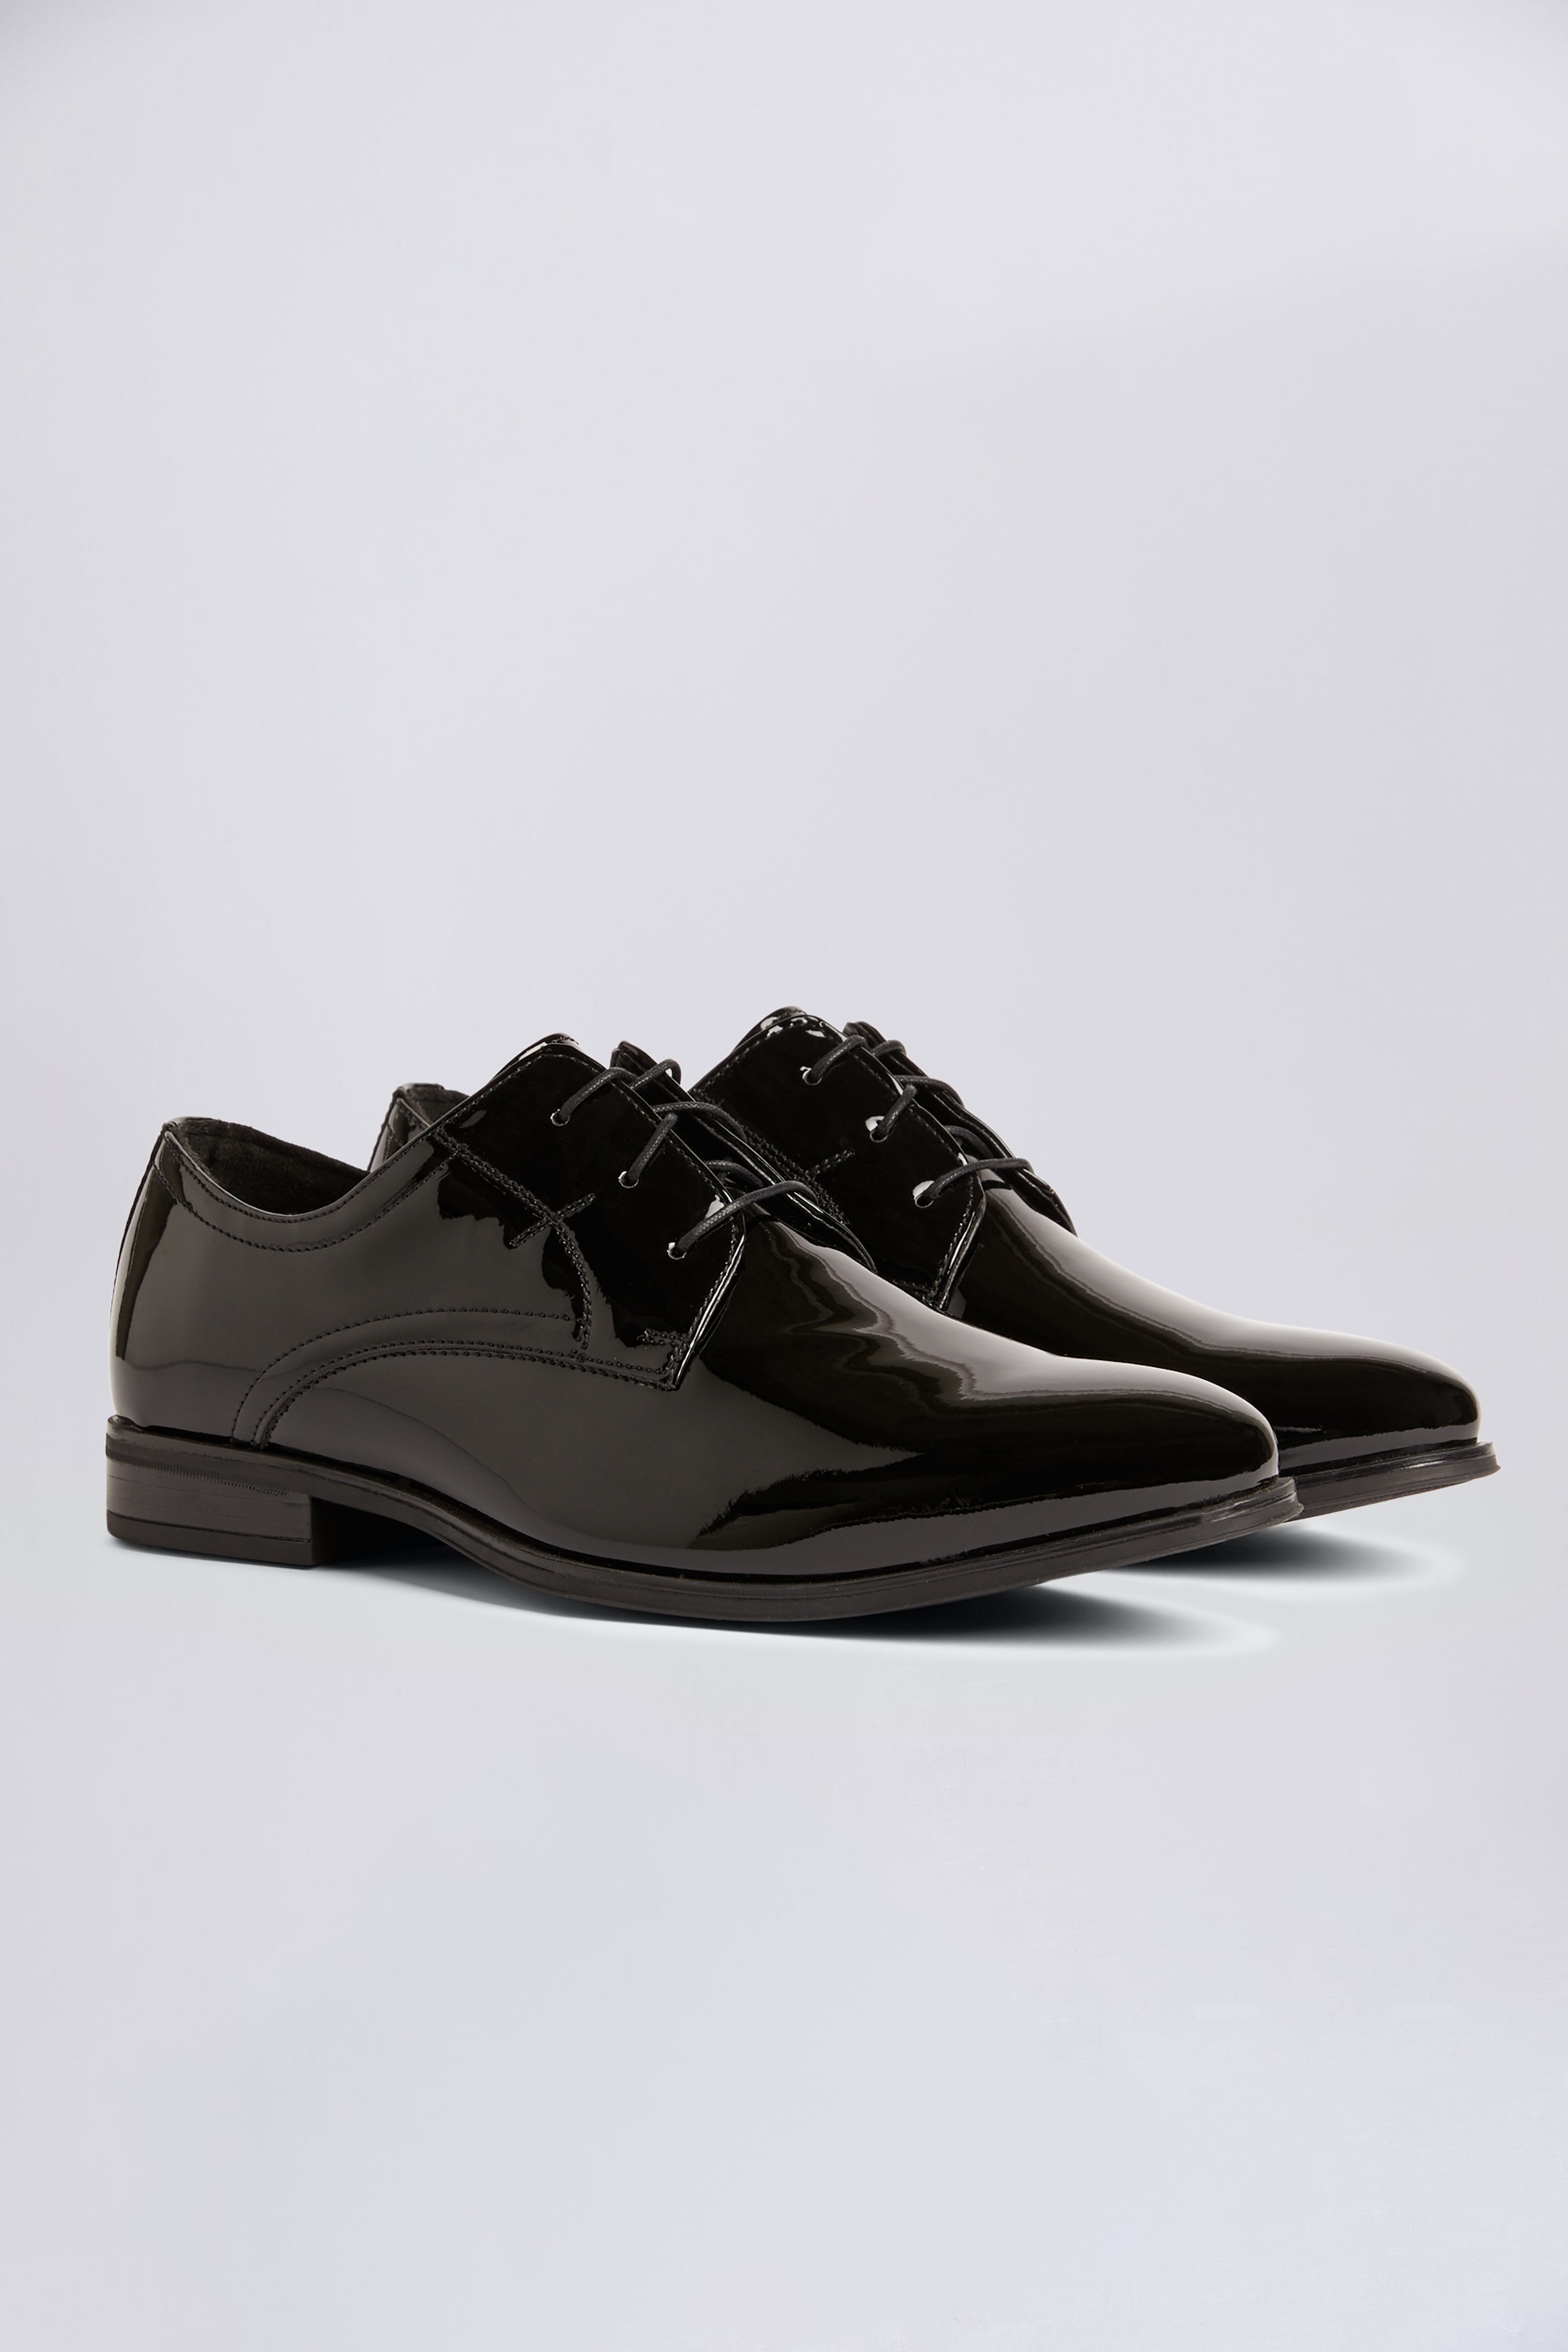 Mayfair Black Patent Dress Shoe | Buy Online at Moss